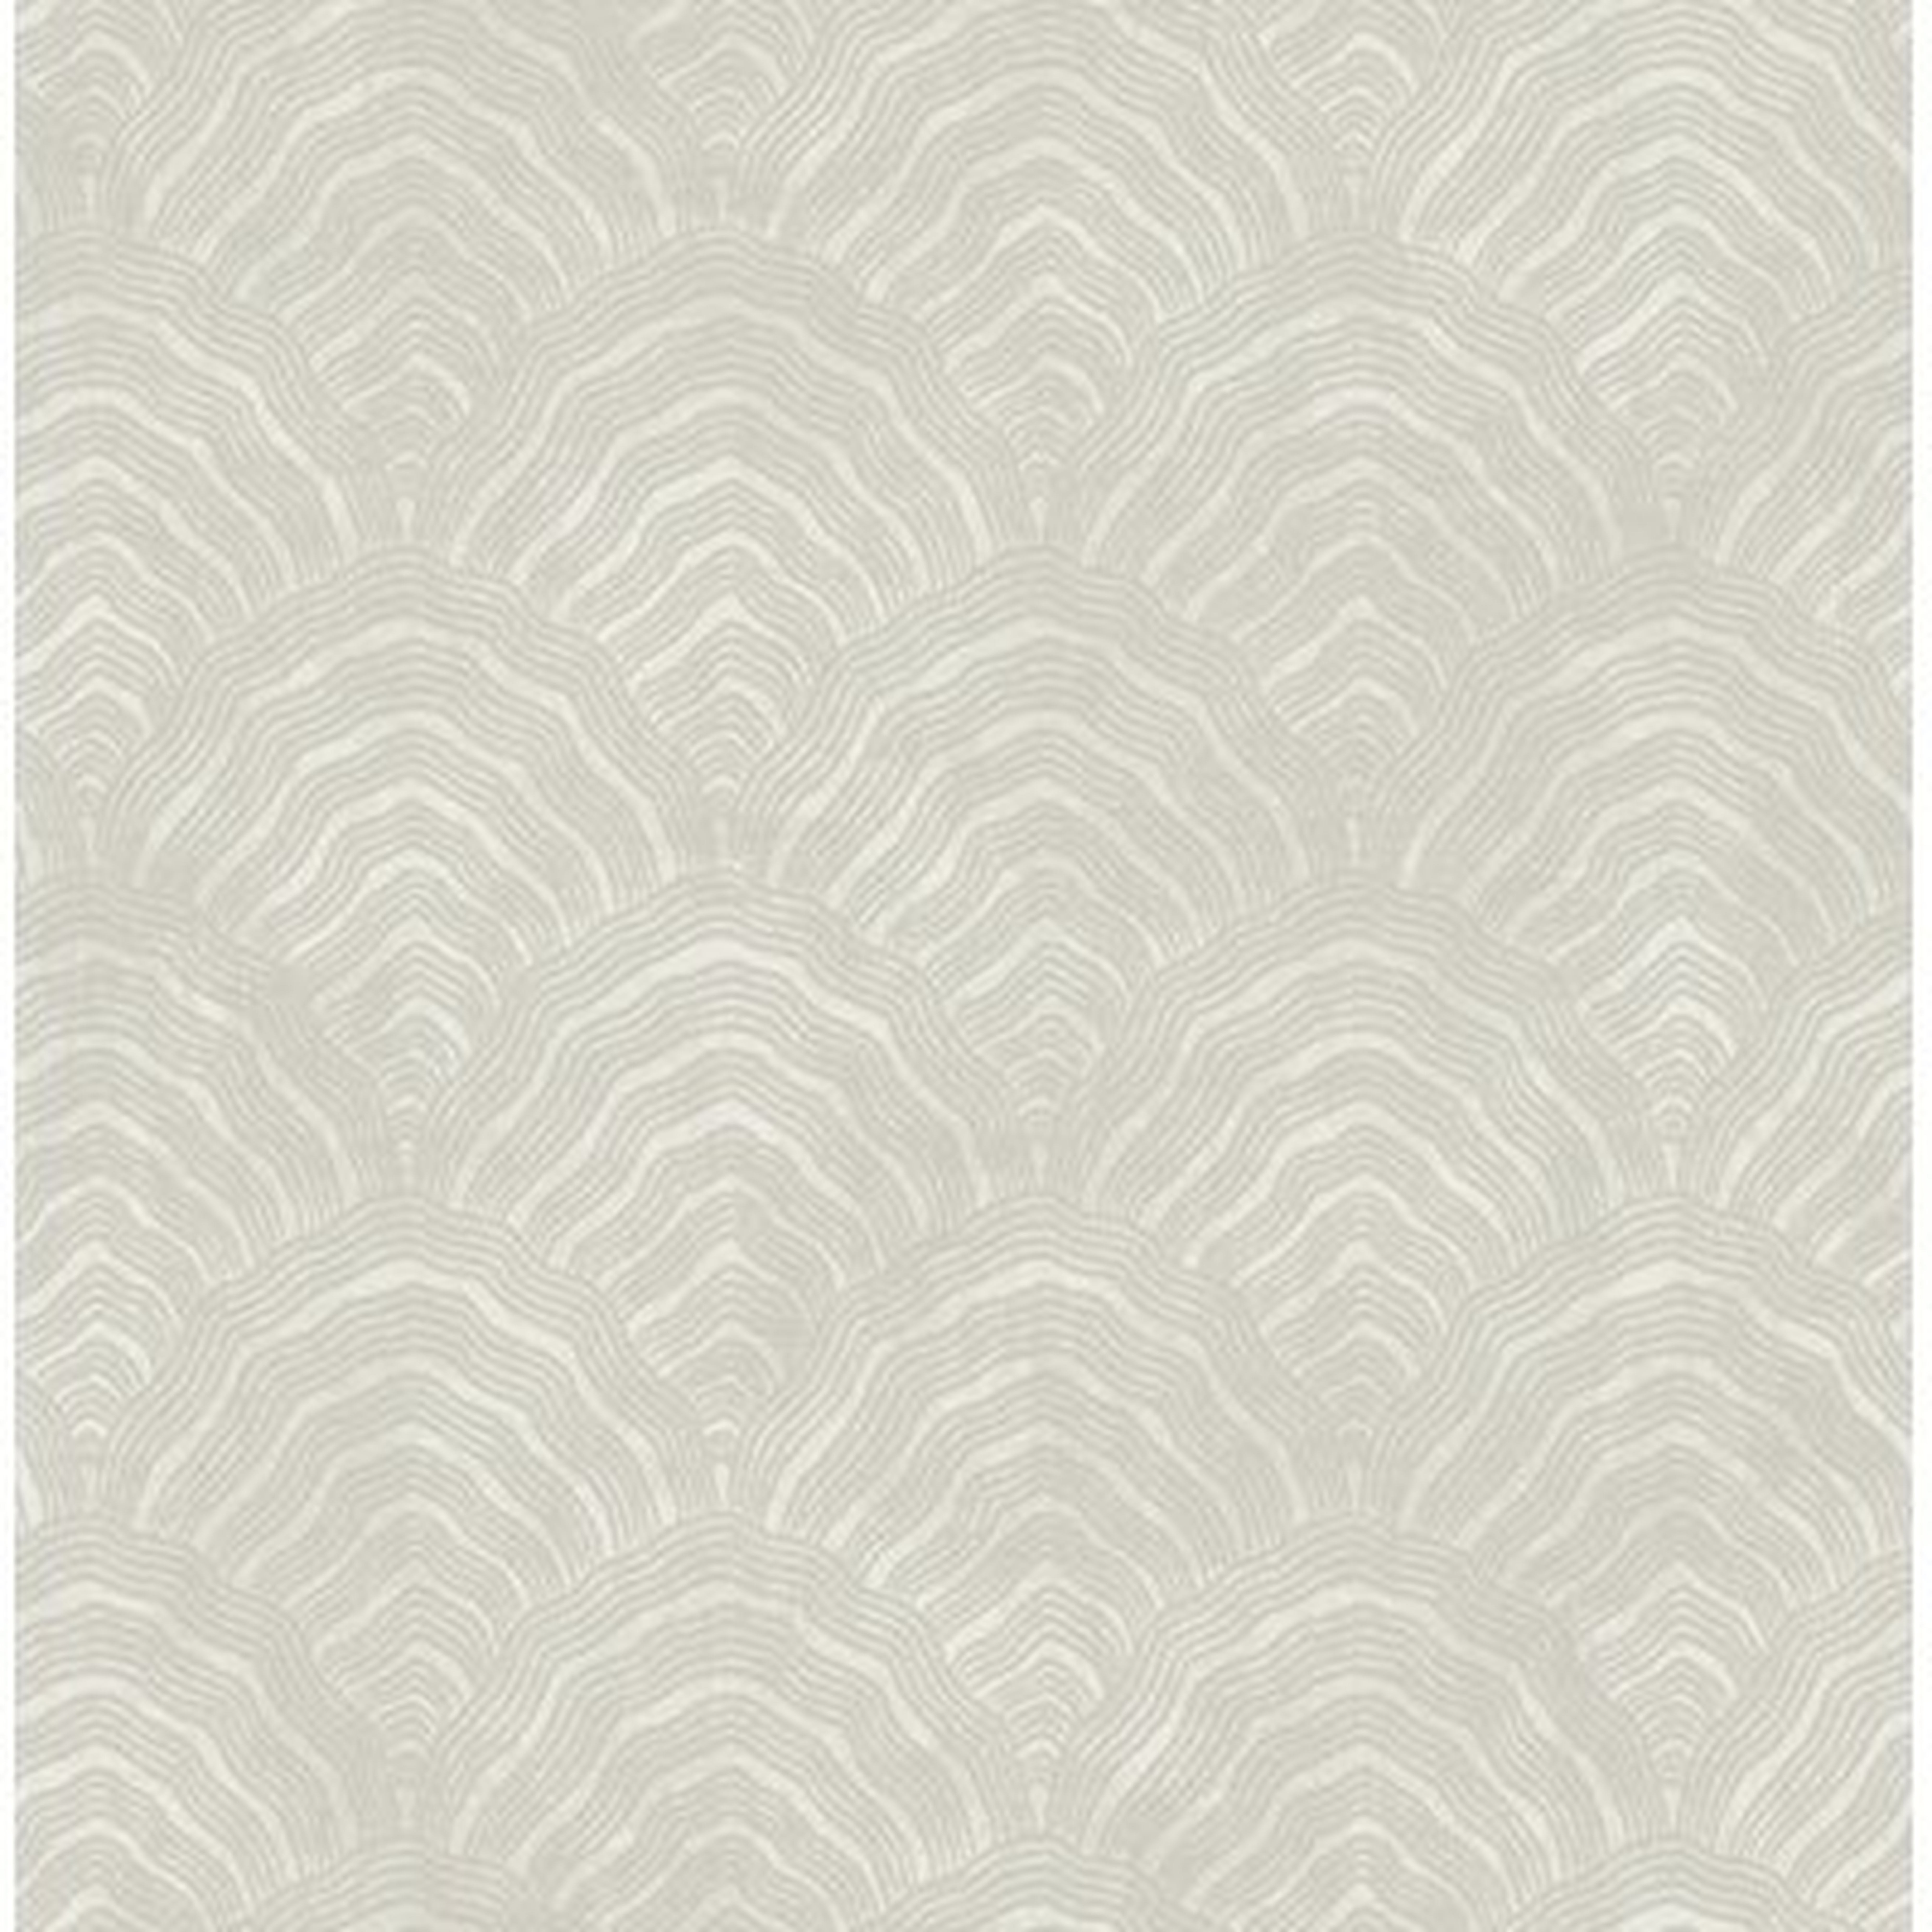 Shafer Scallop 33' x 20.5" Metallic/Foiled Wallpaper Roll - Birch Lane